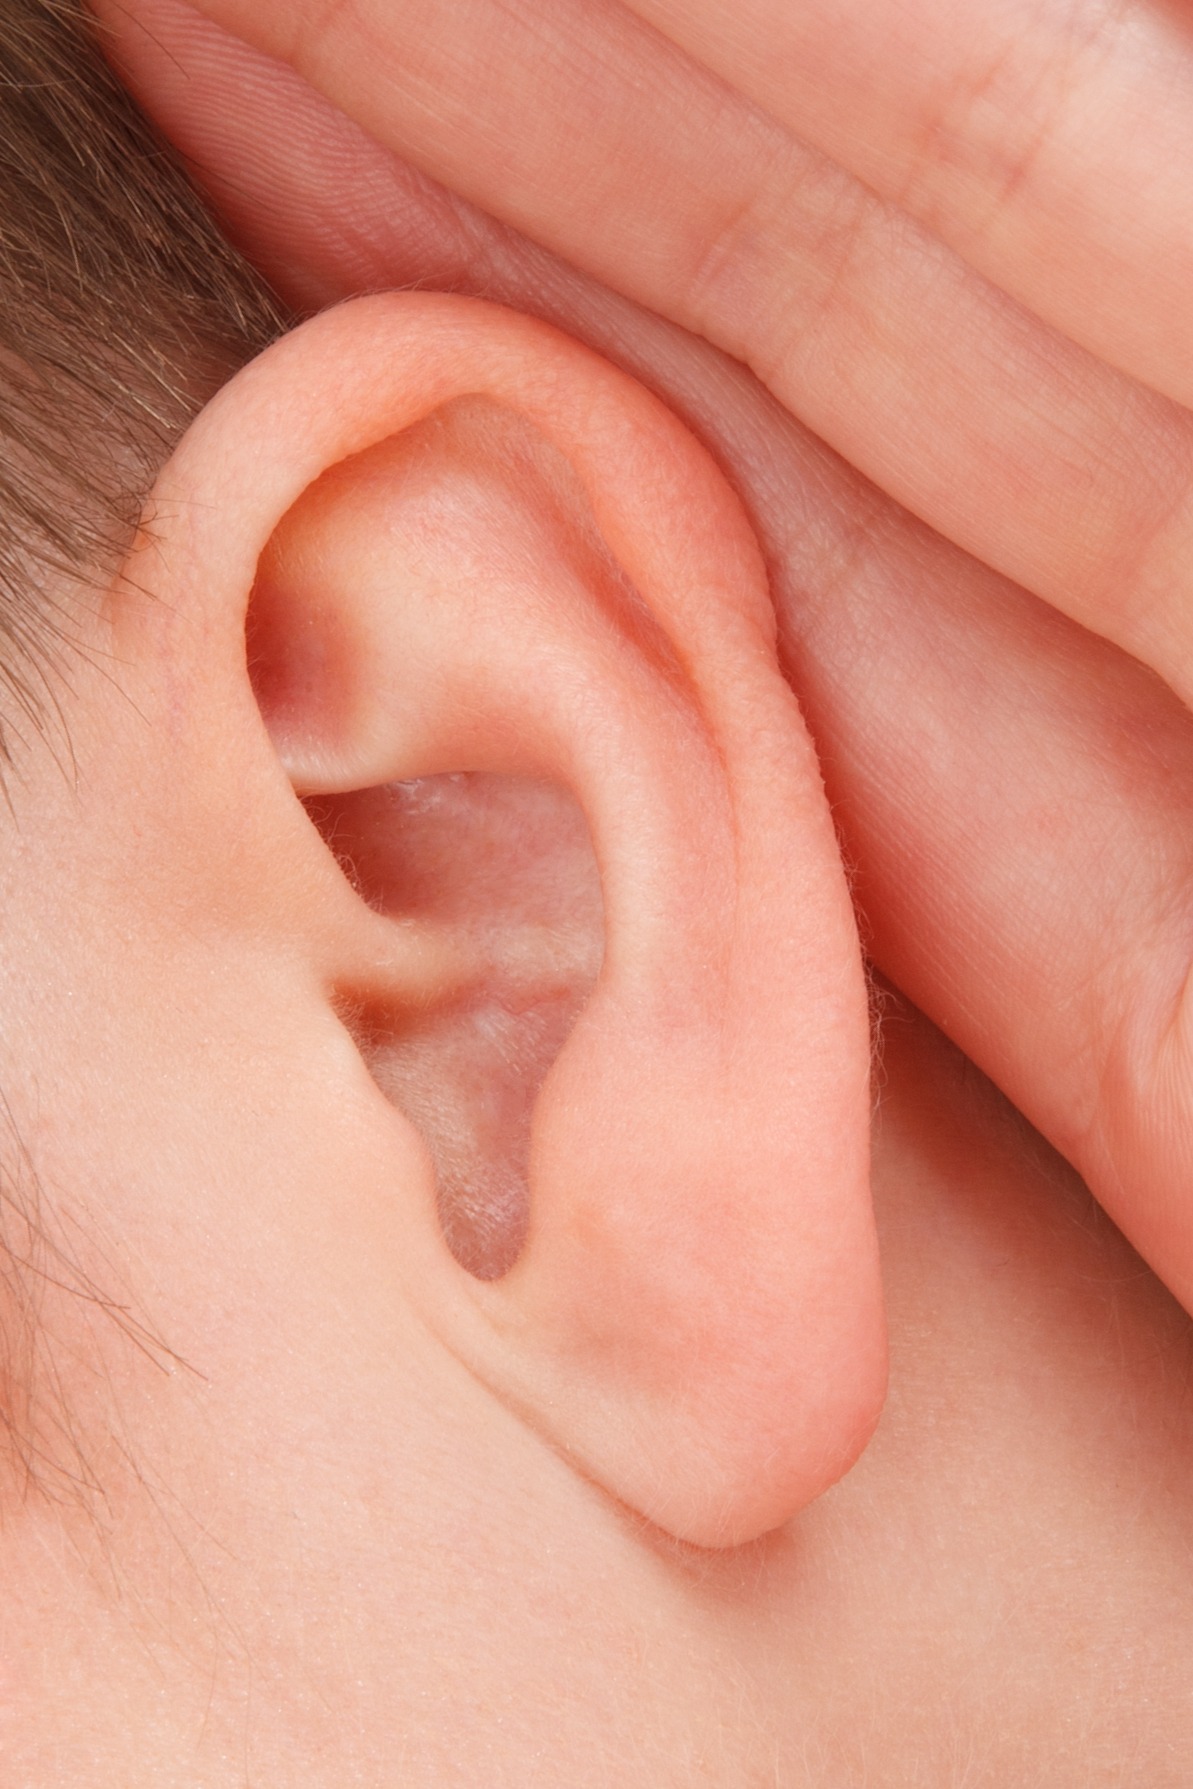 Three hidden side effects of excess ear wax